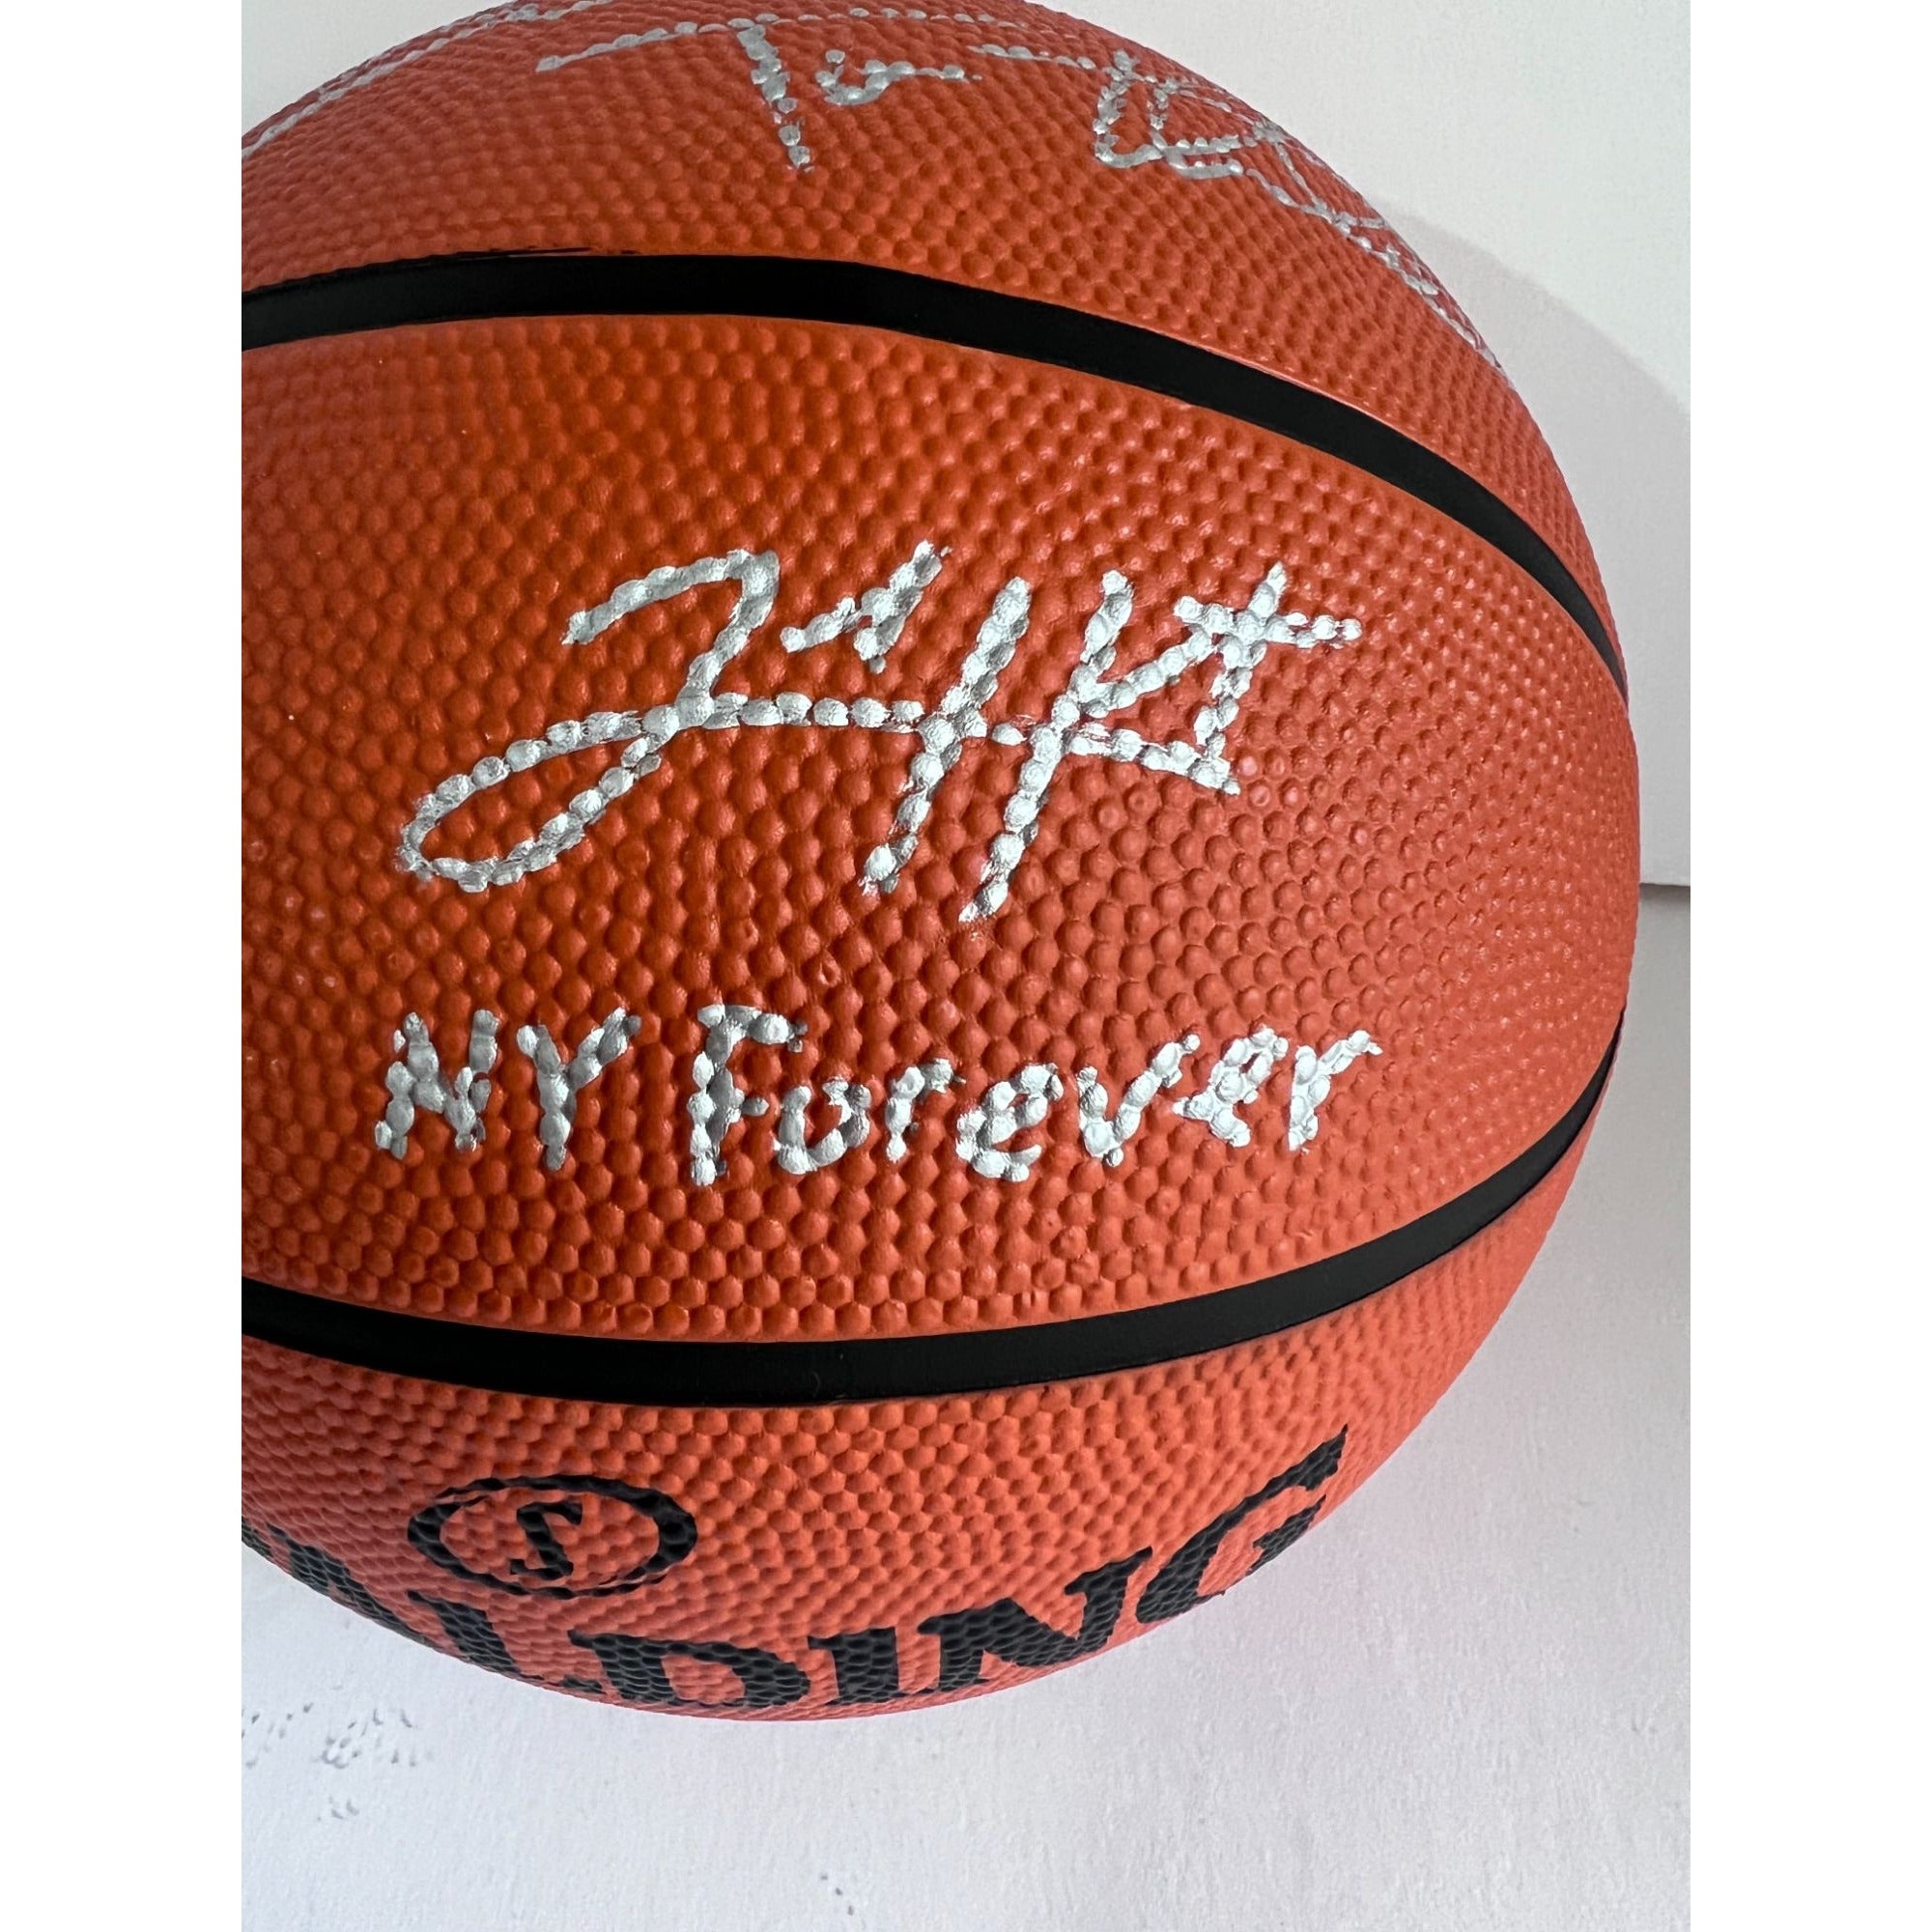 New York Knicks Jalen Brunson, Donte DiVincenzo, Tim Thibodeaux, Josh Hart, Spalding NBA Basketball full size signed with proof